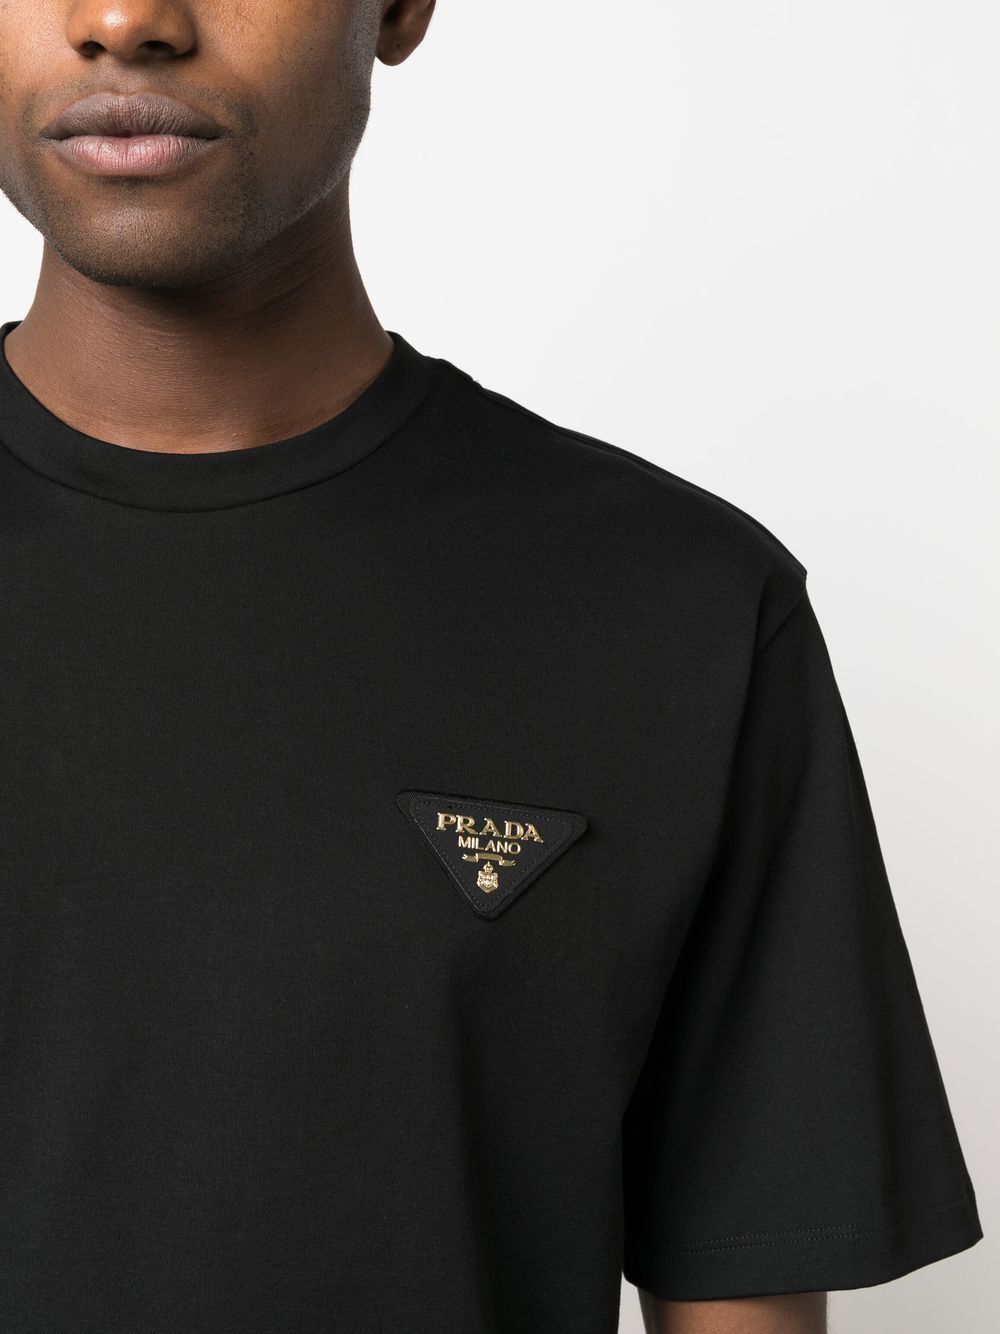 Prada - Black Triangle Logo T-Shirt – The Luxurious Shop